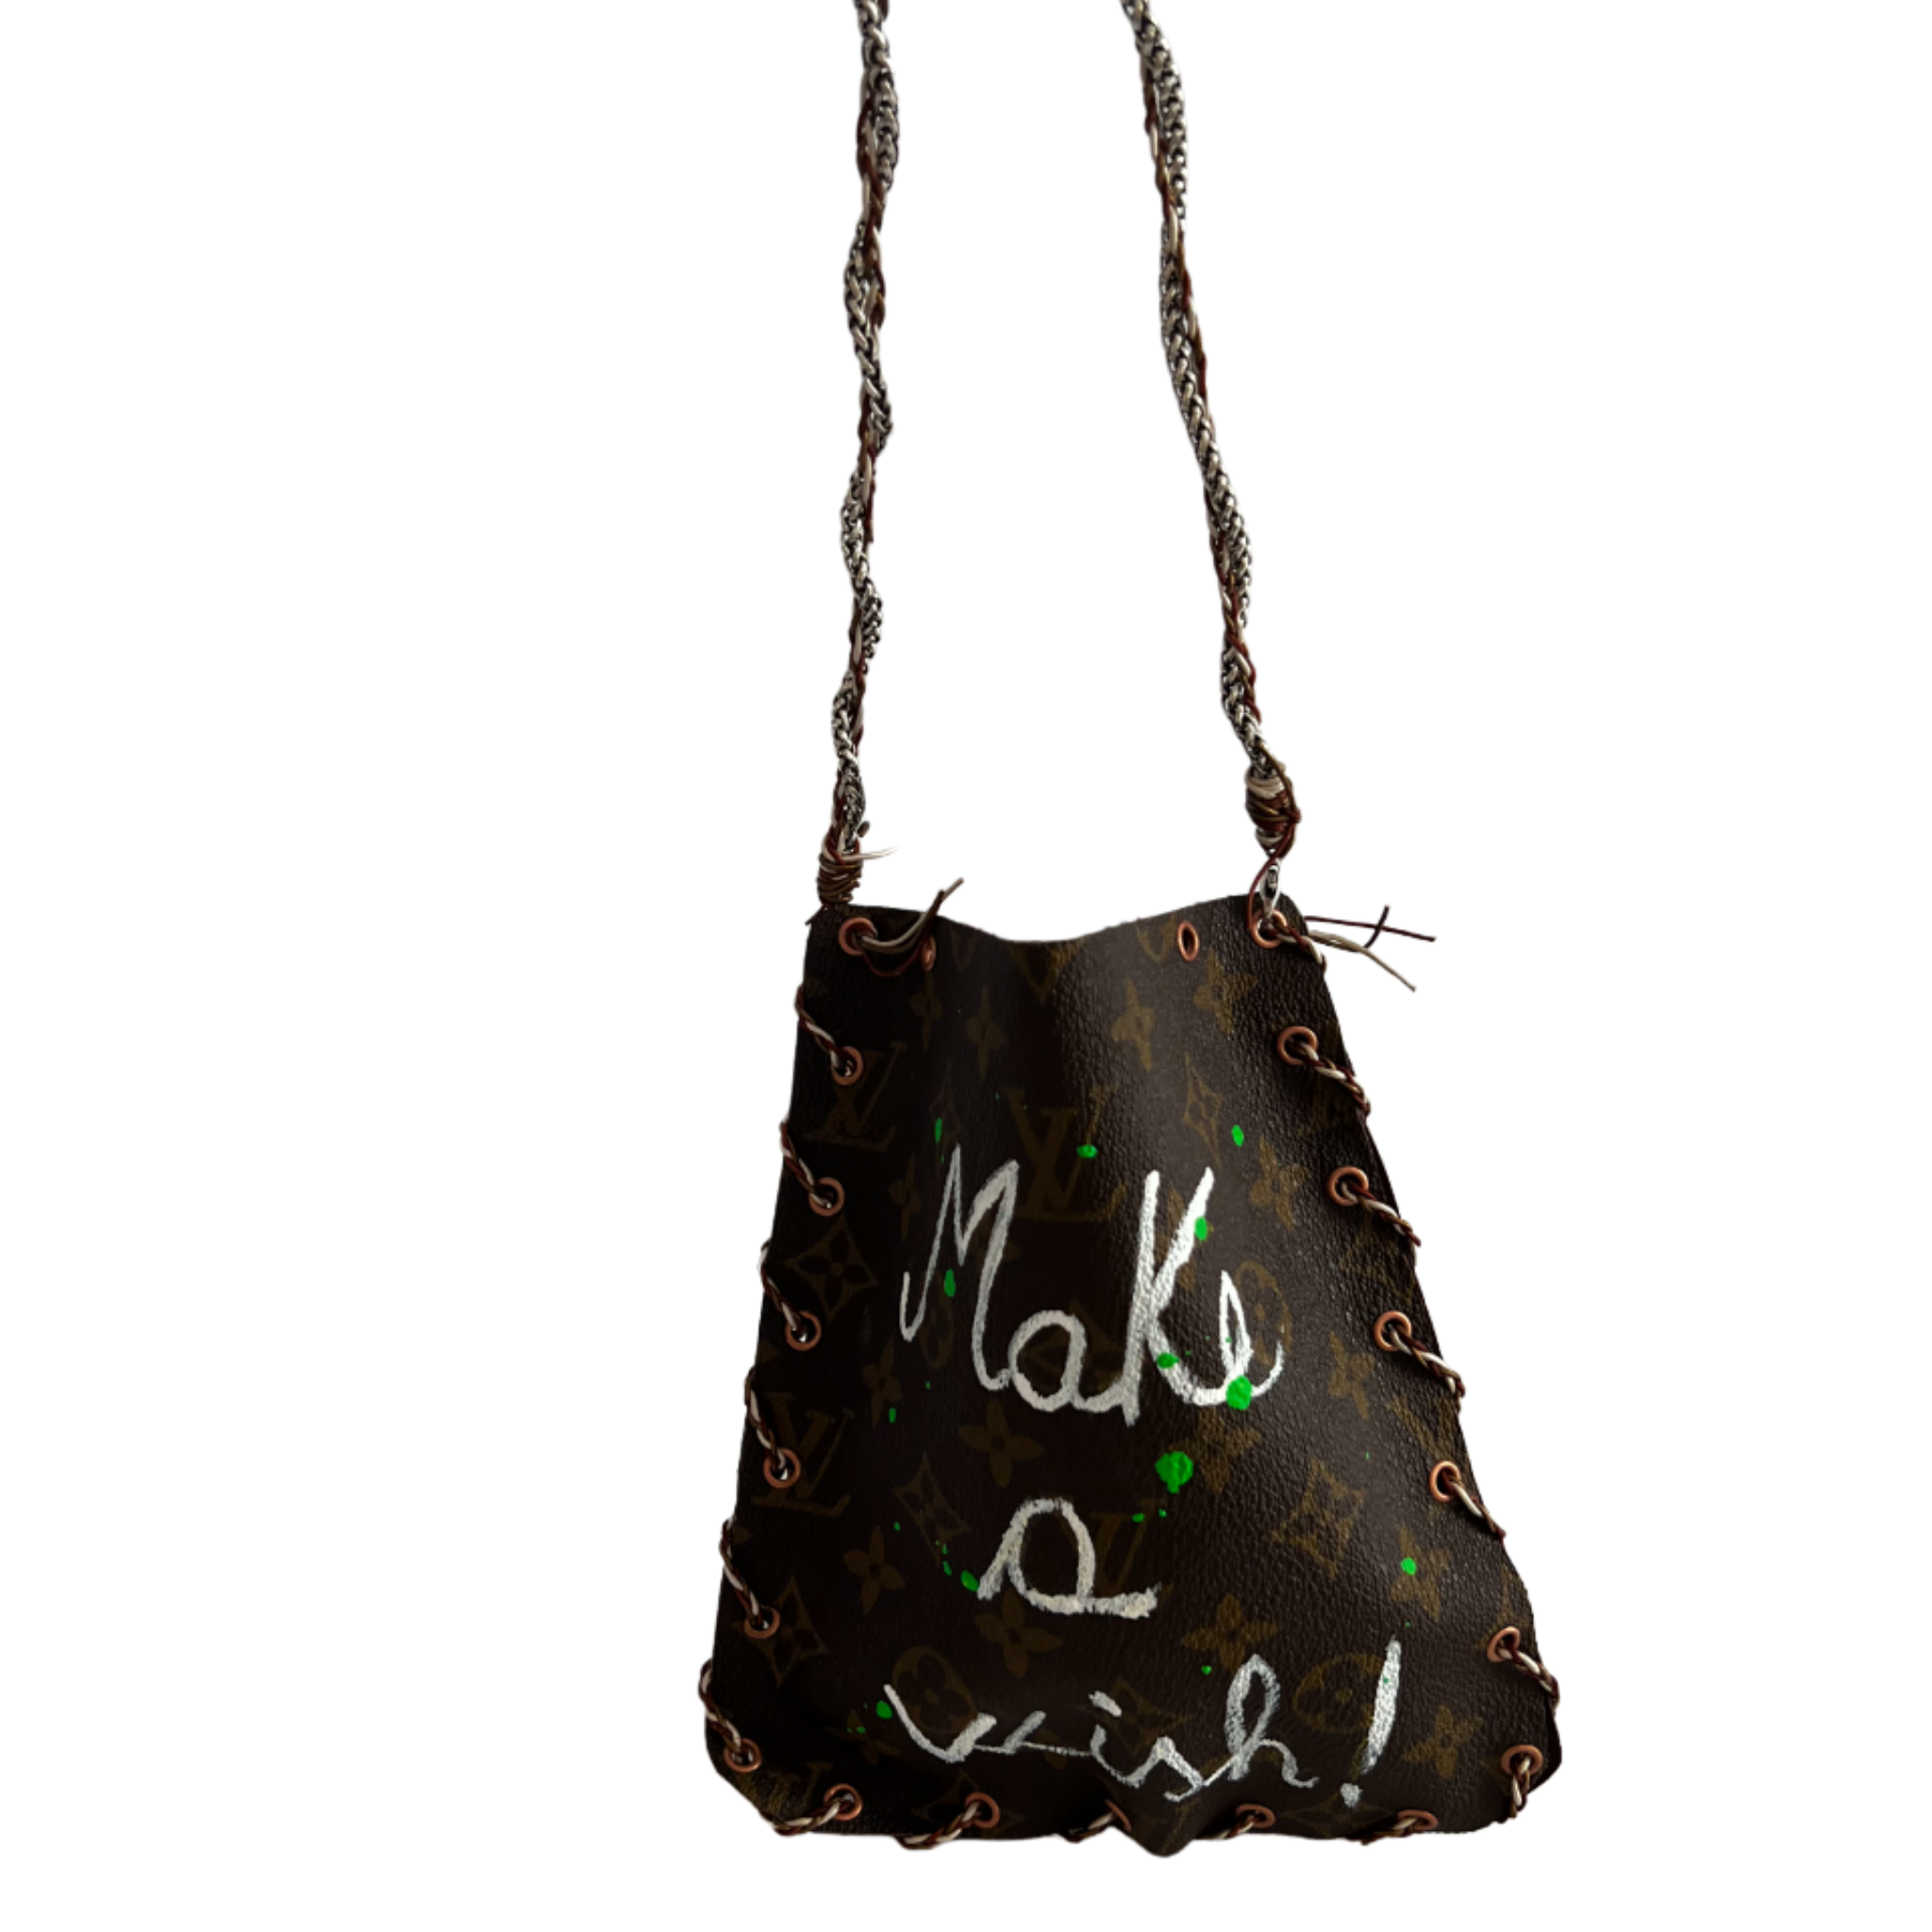 Make A Wish Hand-Painted LV Bag